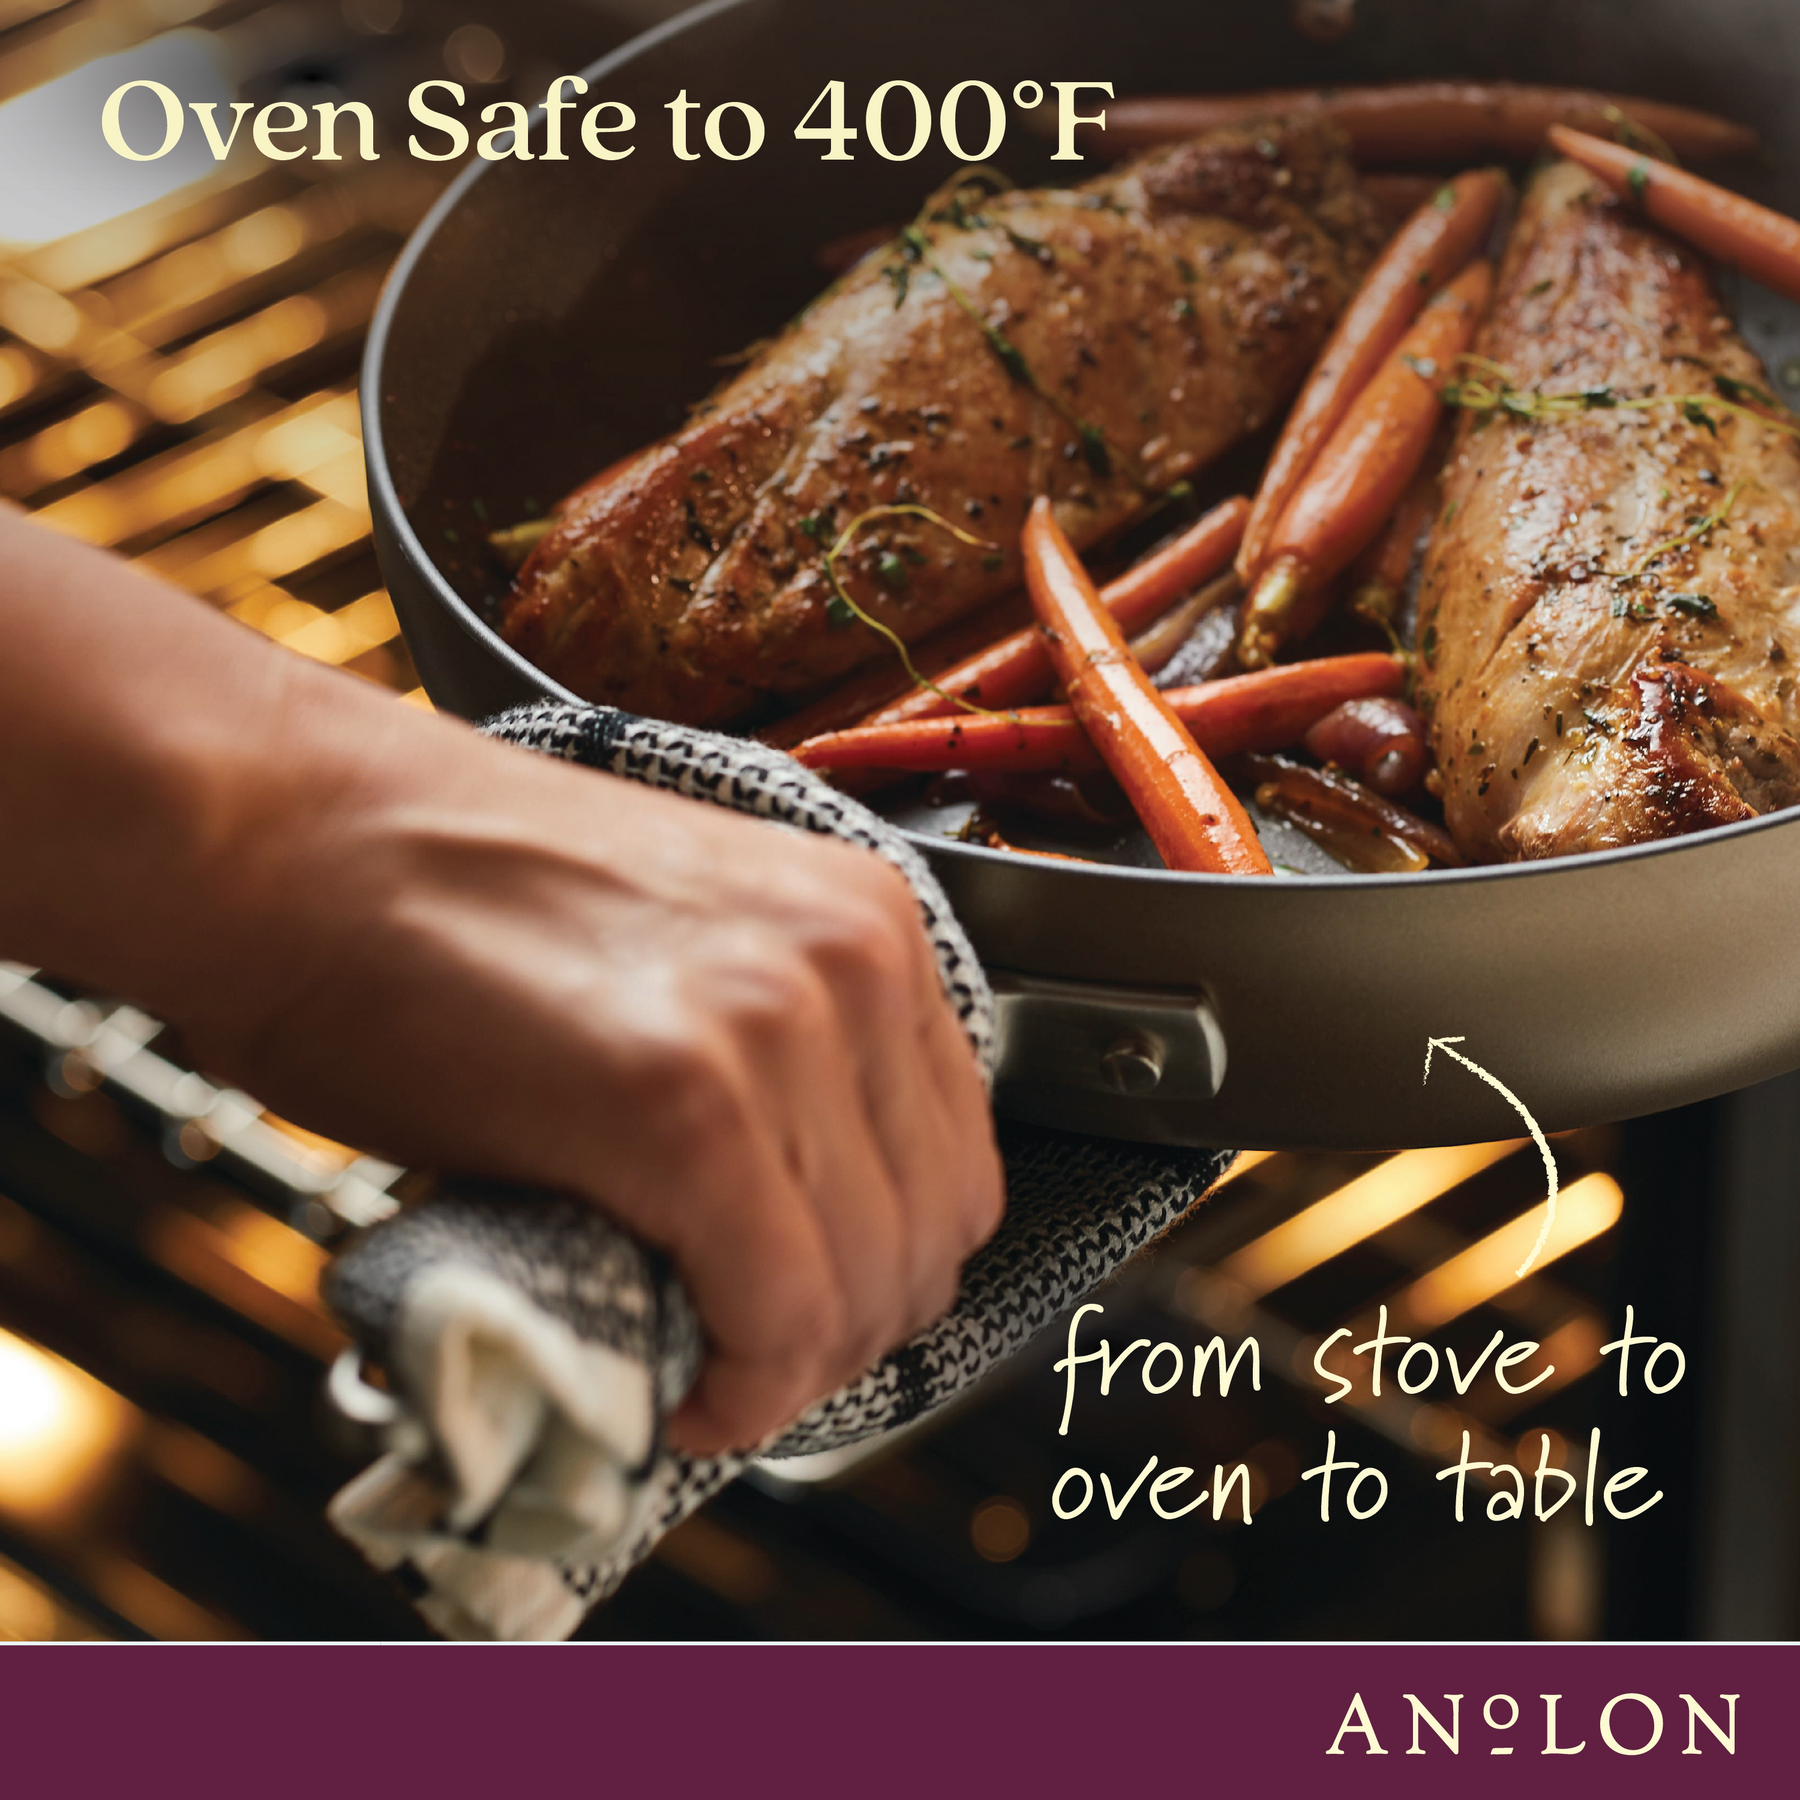 Anolon Advanced Triply Stainless Steel Frying Pan Set / Fry Pan Set /